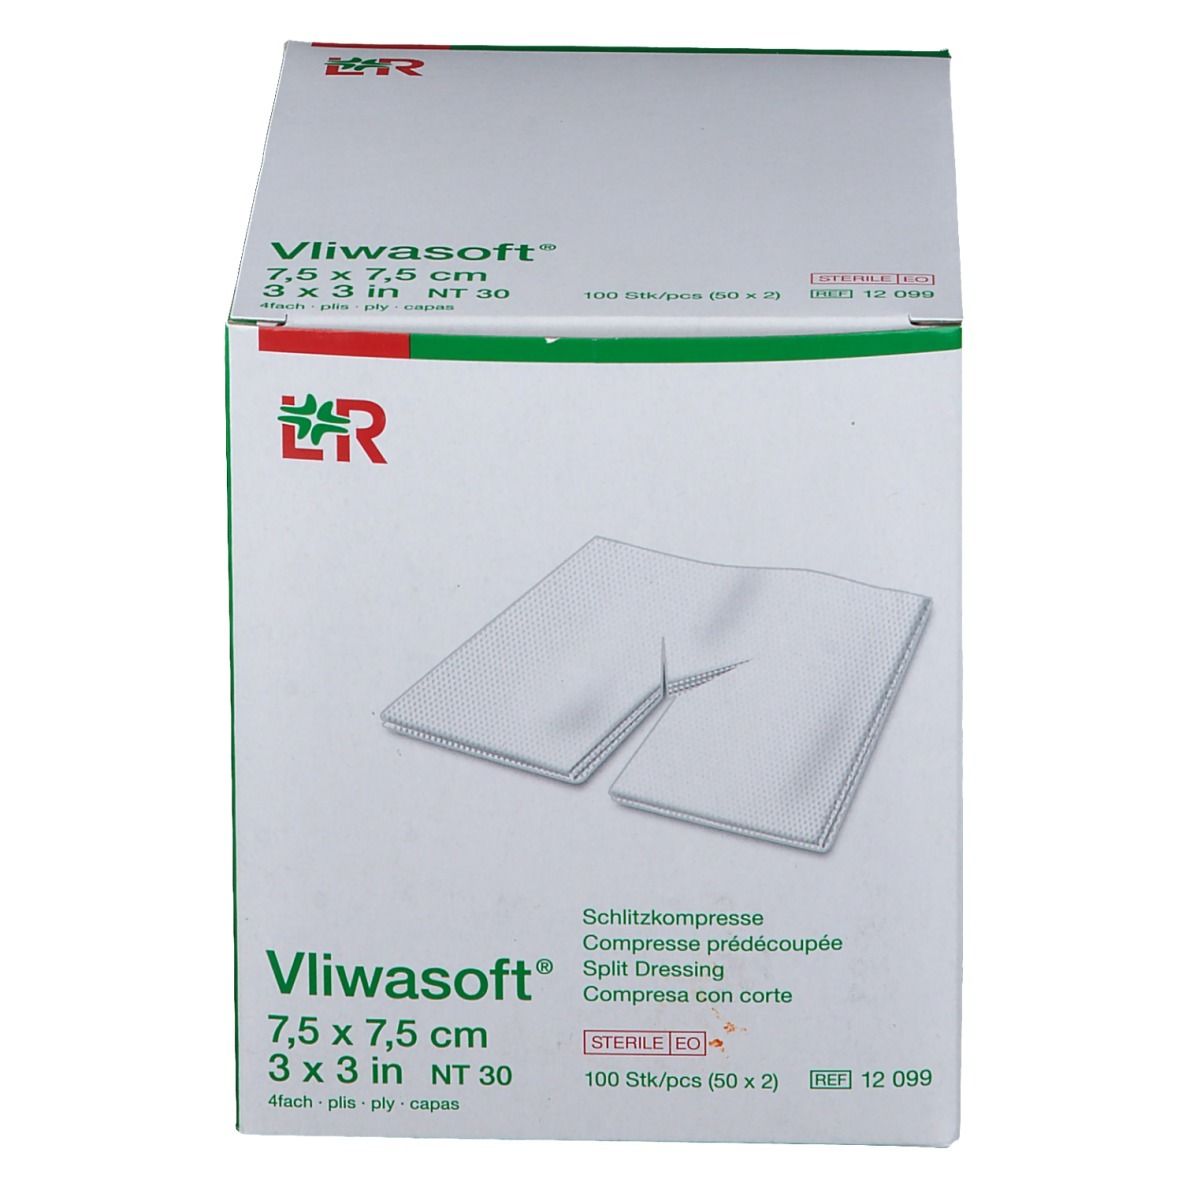 Vliwasoft® Schlitzkompresse 7,5 cm x 7,5 cm 4lagig steril